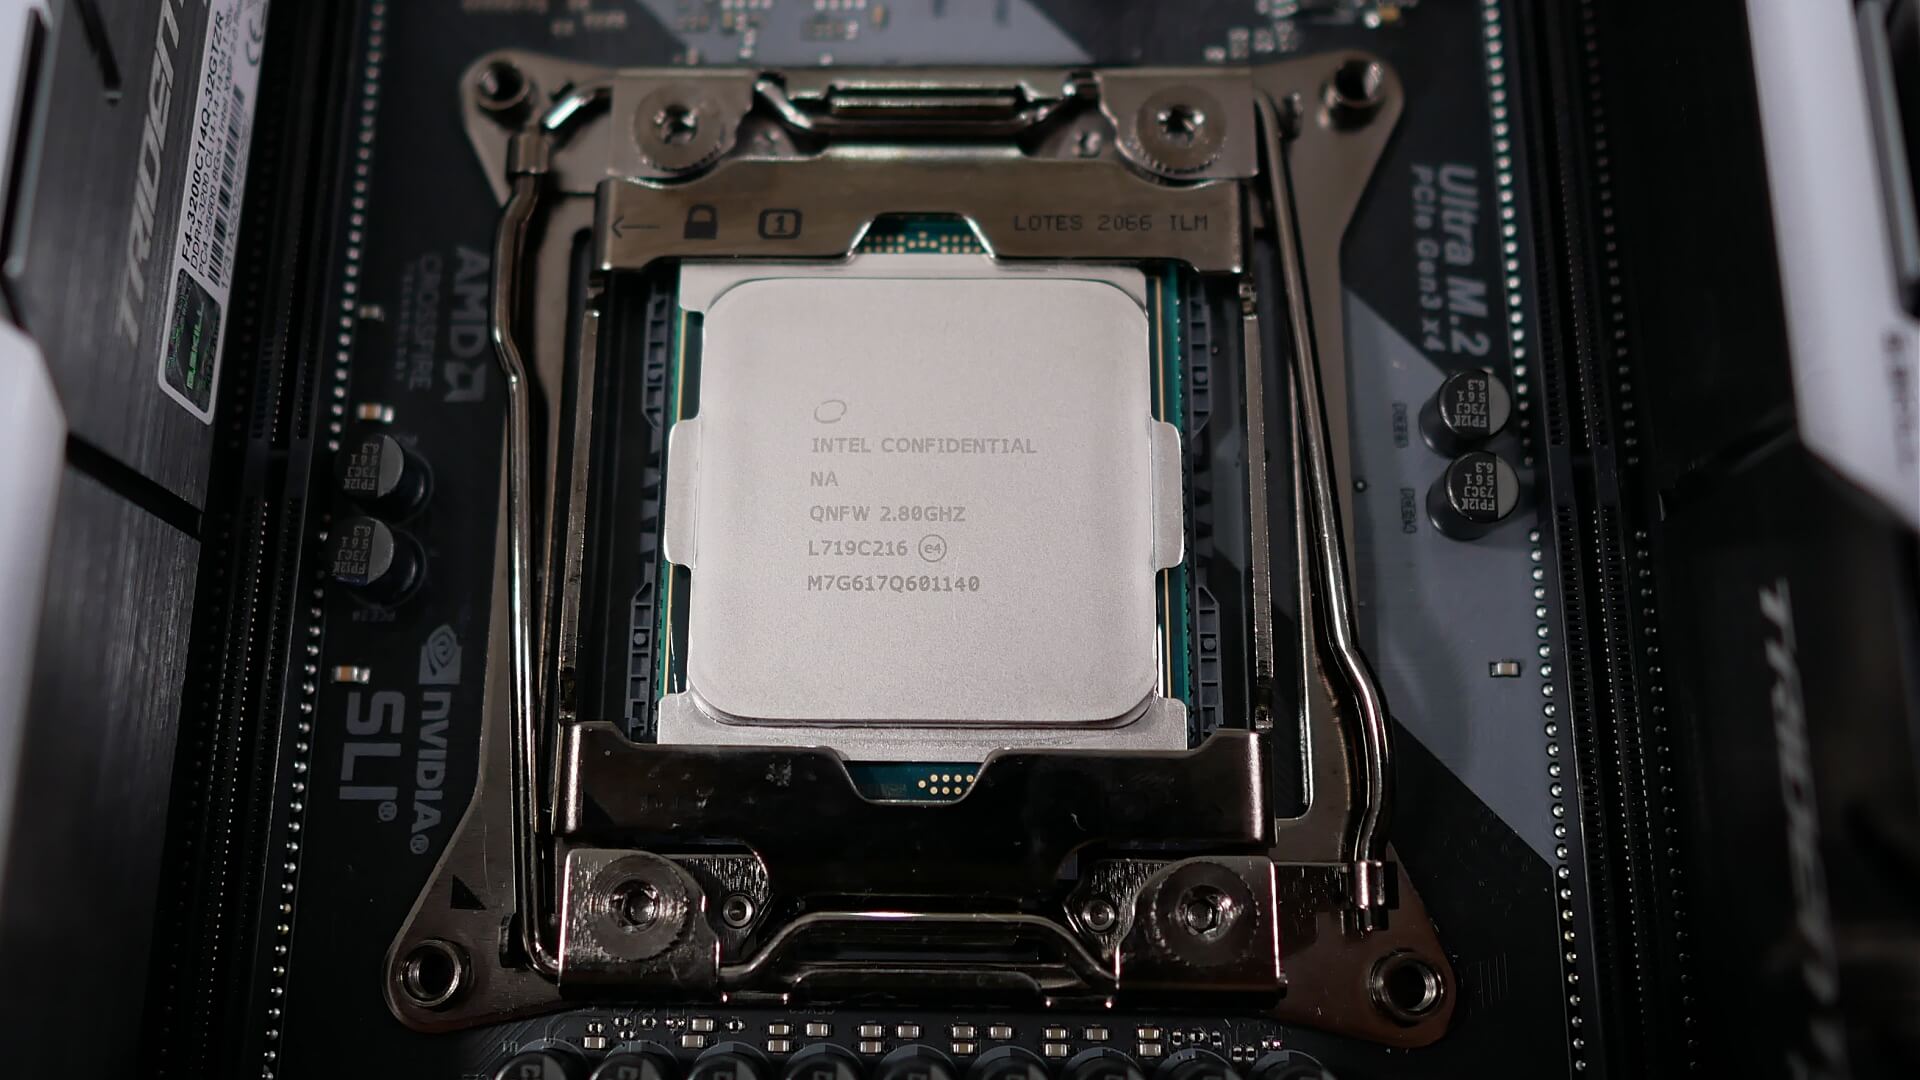 Intel 7 series c216